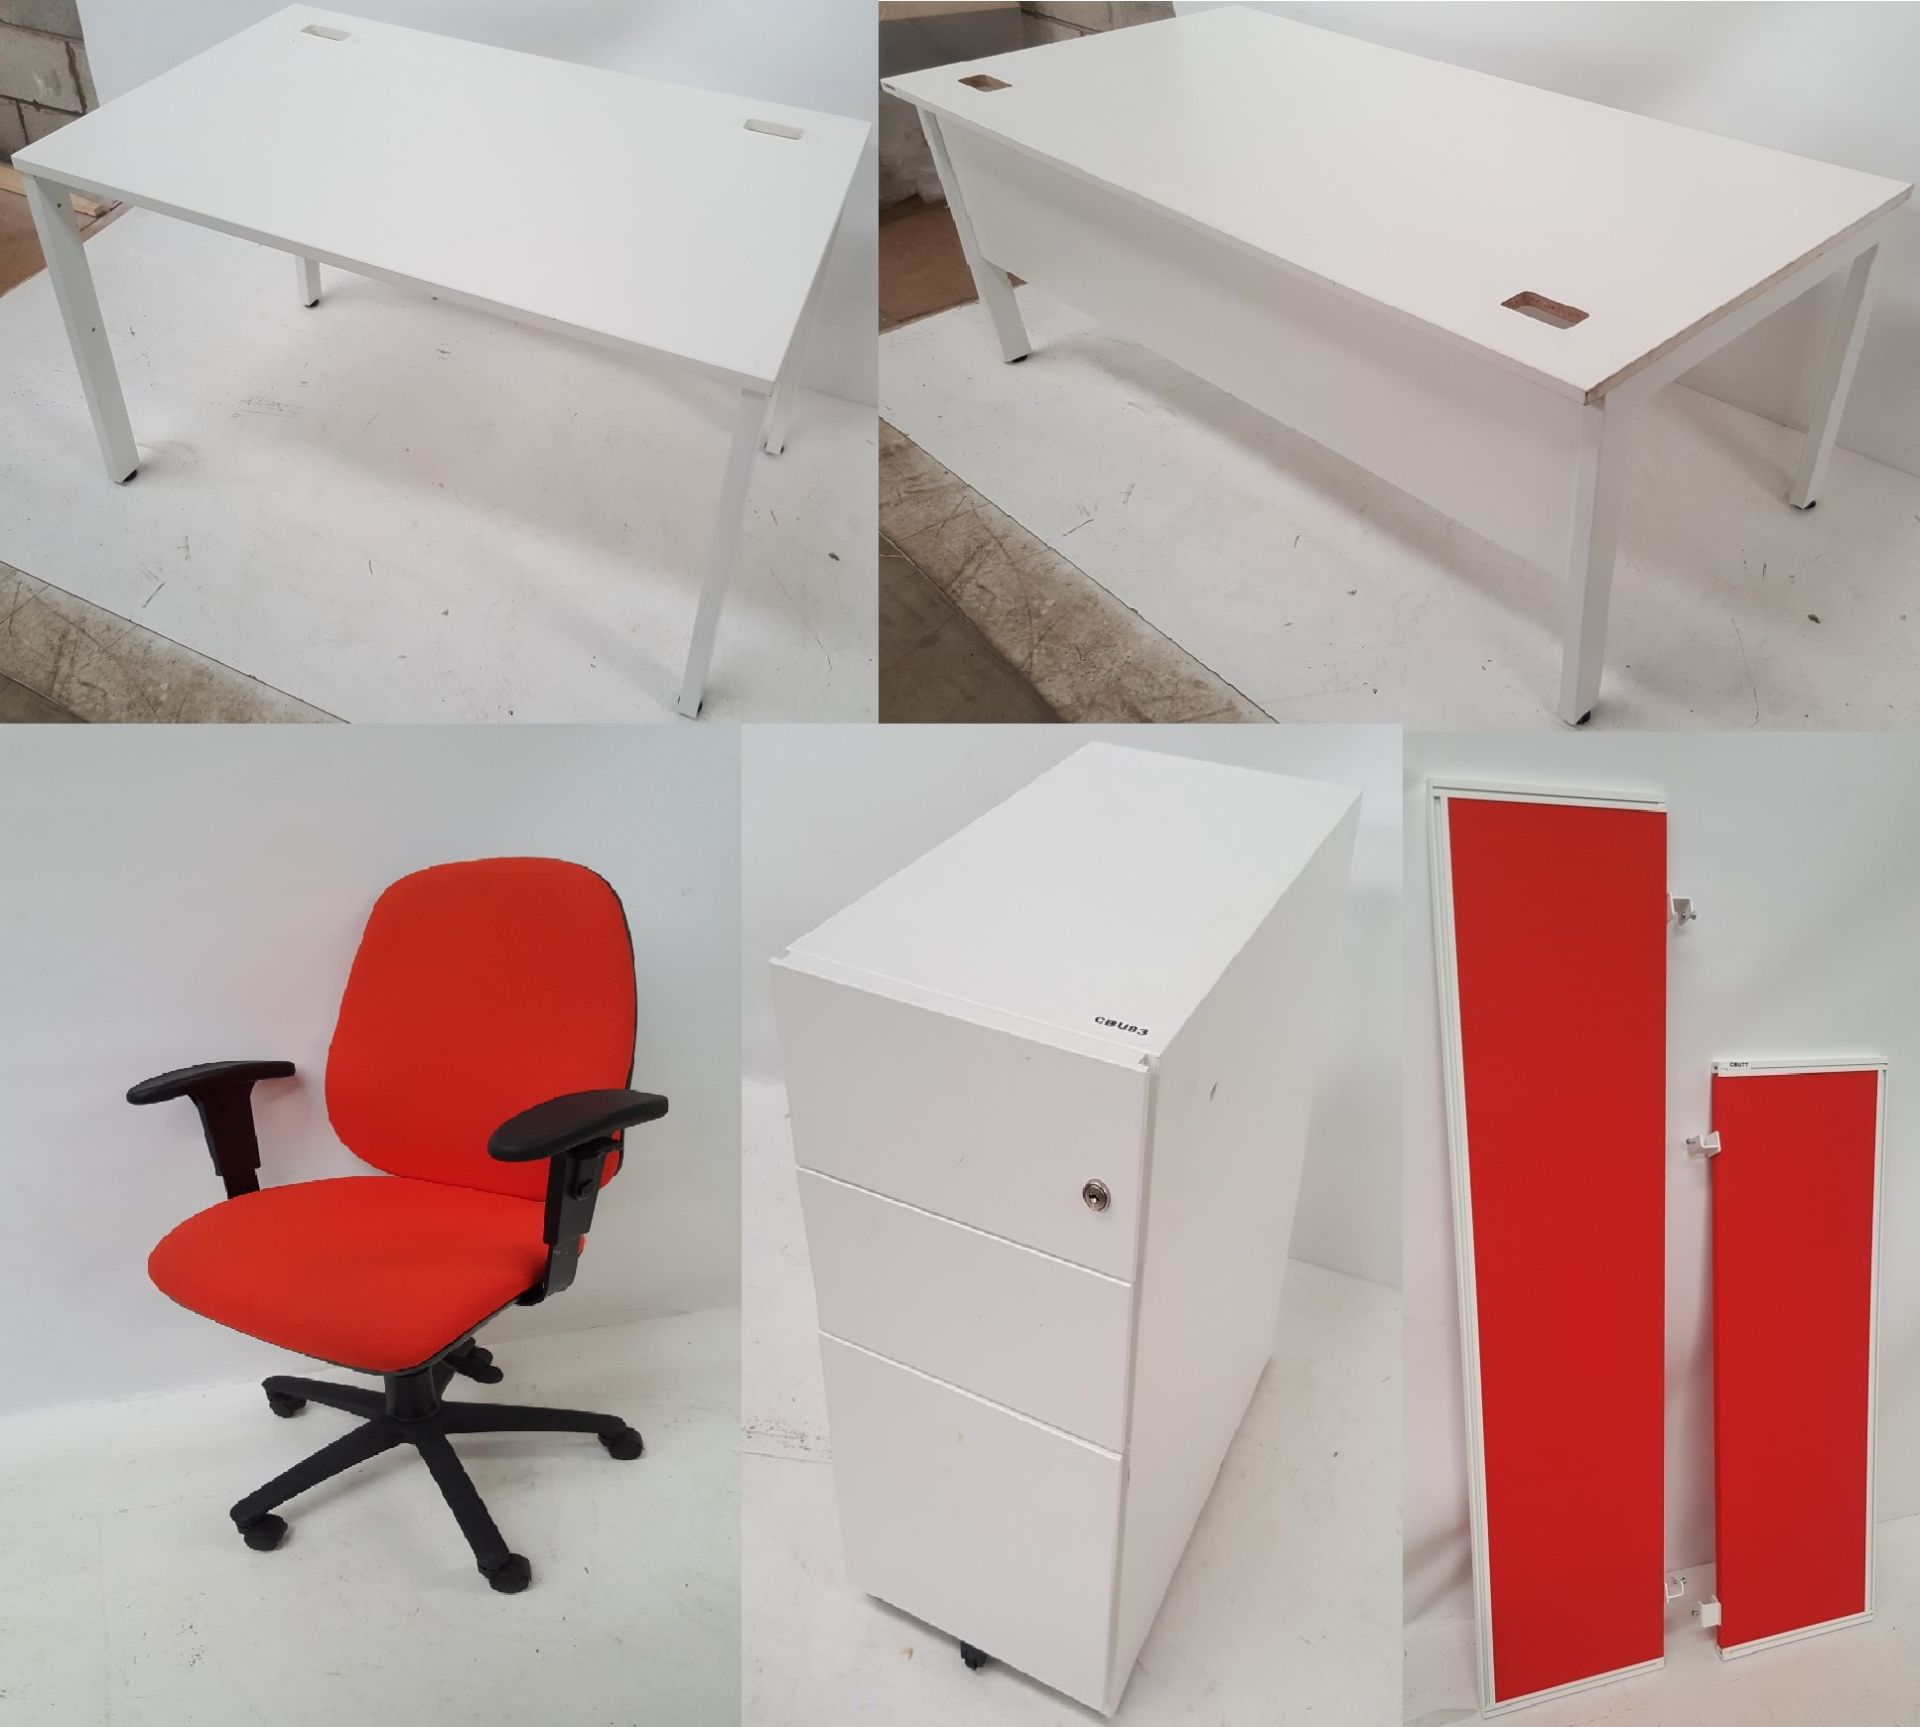 3 x Gresham Contemporary Office Desk Sets in White - Includes Desks, Swivel Chairs, Desk Dividers